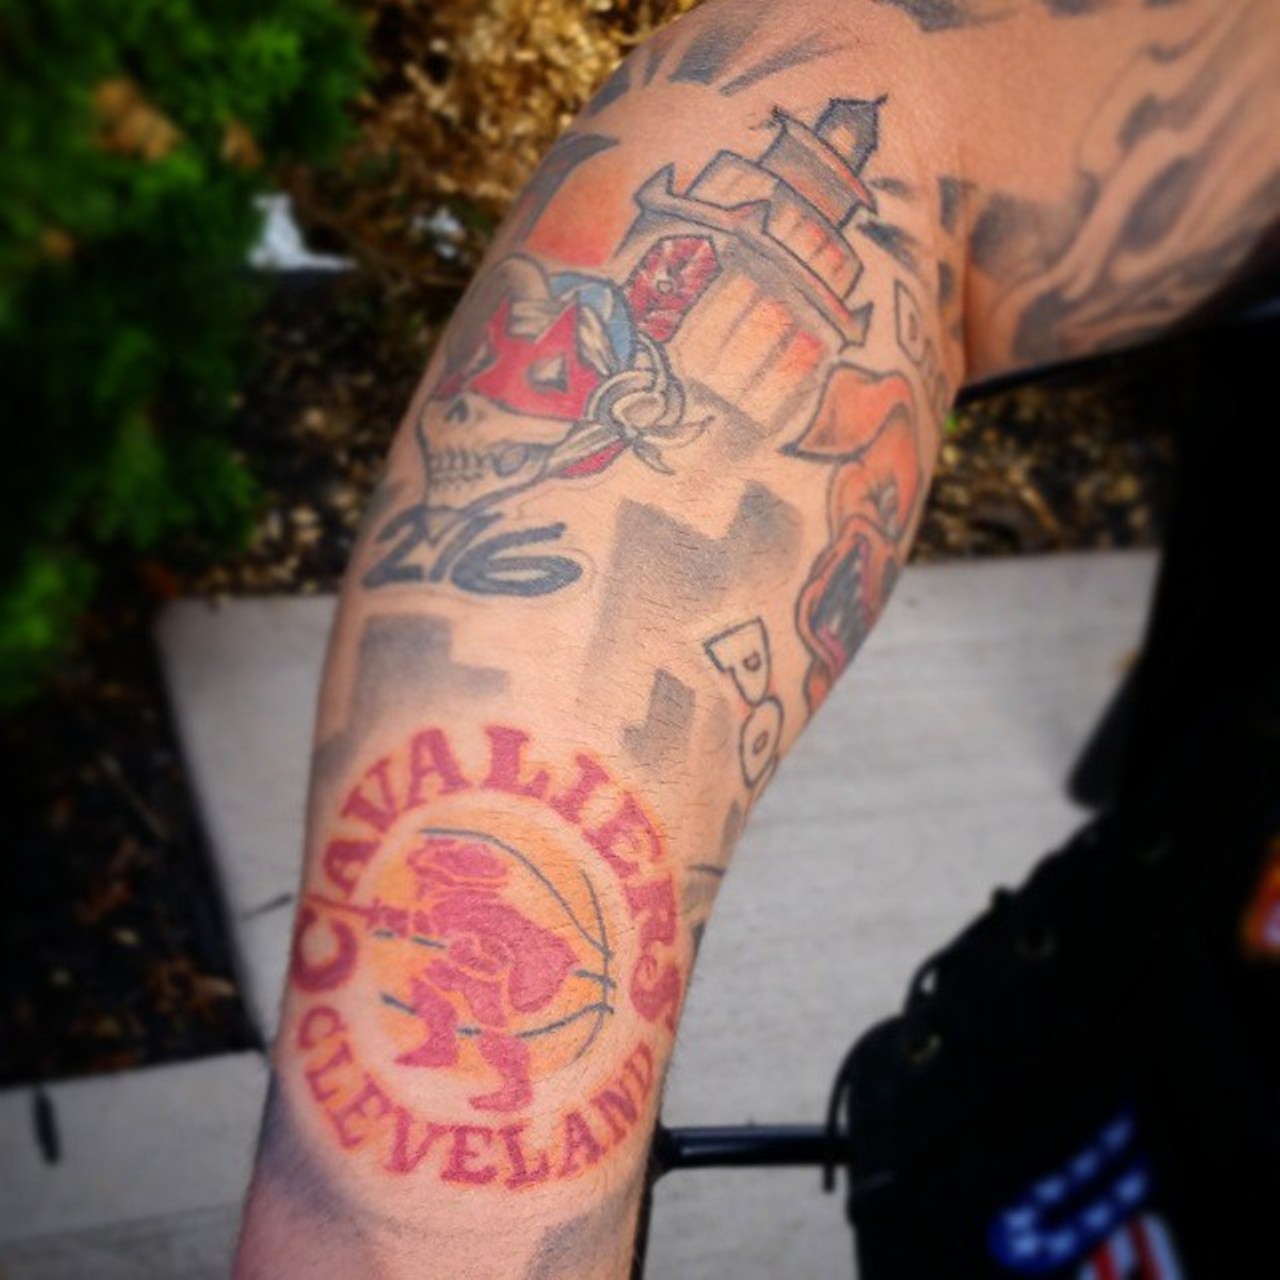 Atlanta Tattoo Artist Theo Walker - Today's Session, Worked 6 hours on this  Atlanta Sports themed Piece for Jordan's first tattoo, always fun to tattoo  other Real Atlanta fans 💪🏽😆 #goldenanchortattoo #atlantatattooartist #